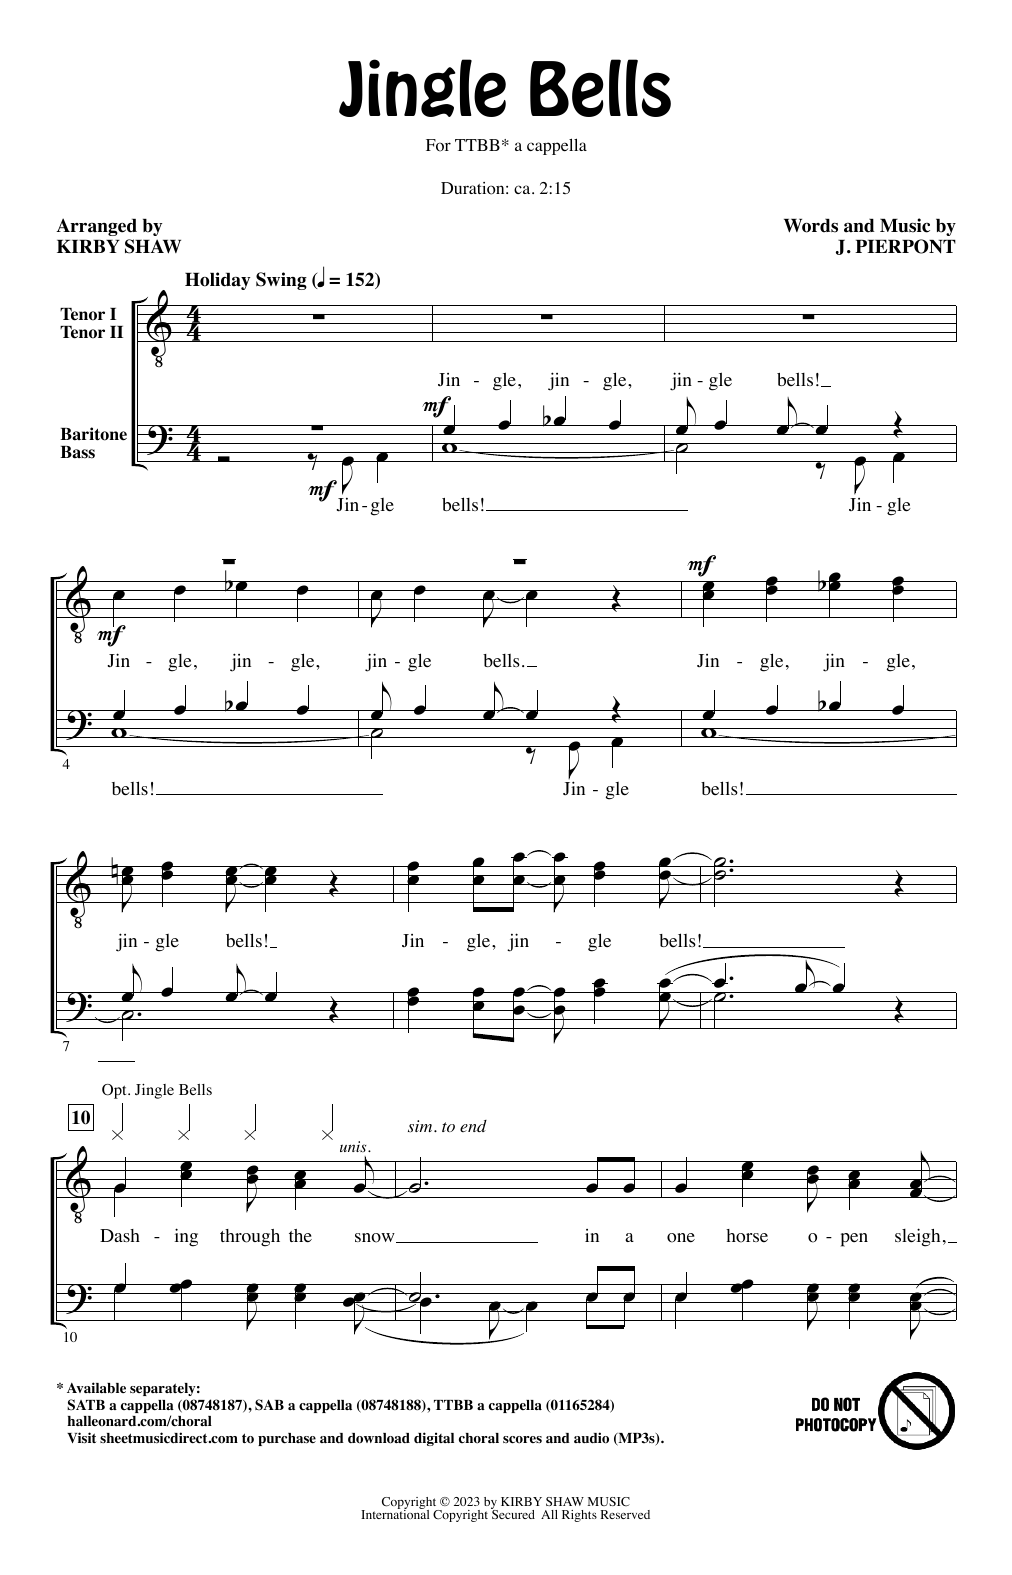 J. Pierpont Jingle Bells (arr. Kirby Shaw) Sheet Music Notes & Chords for TTBB Choir - Download or Print PDF